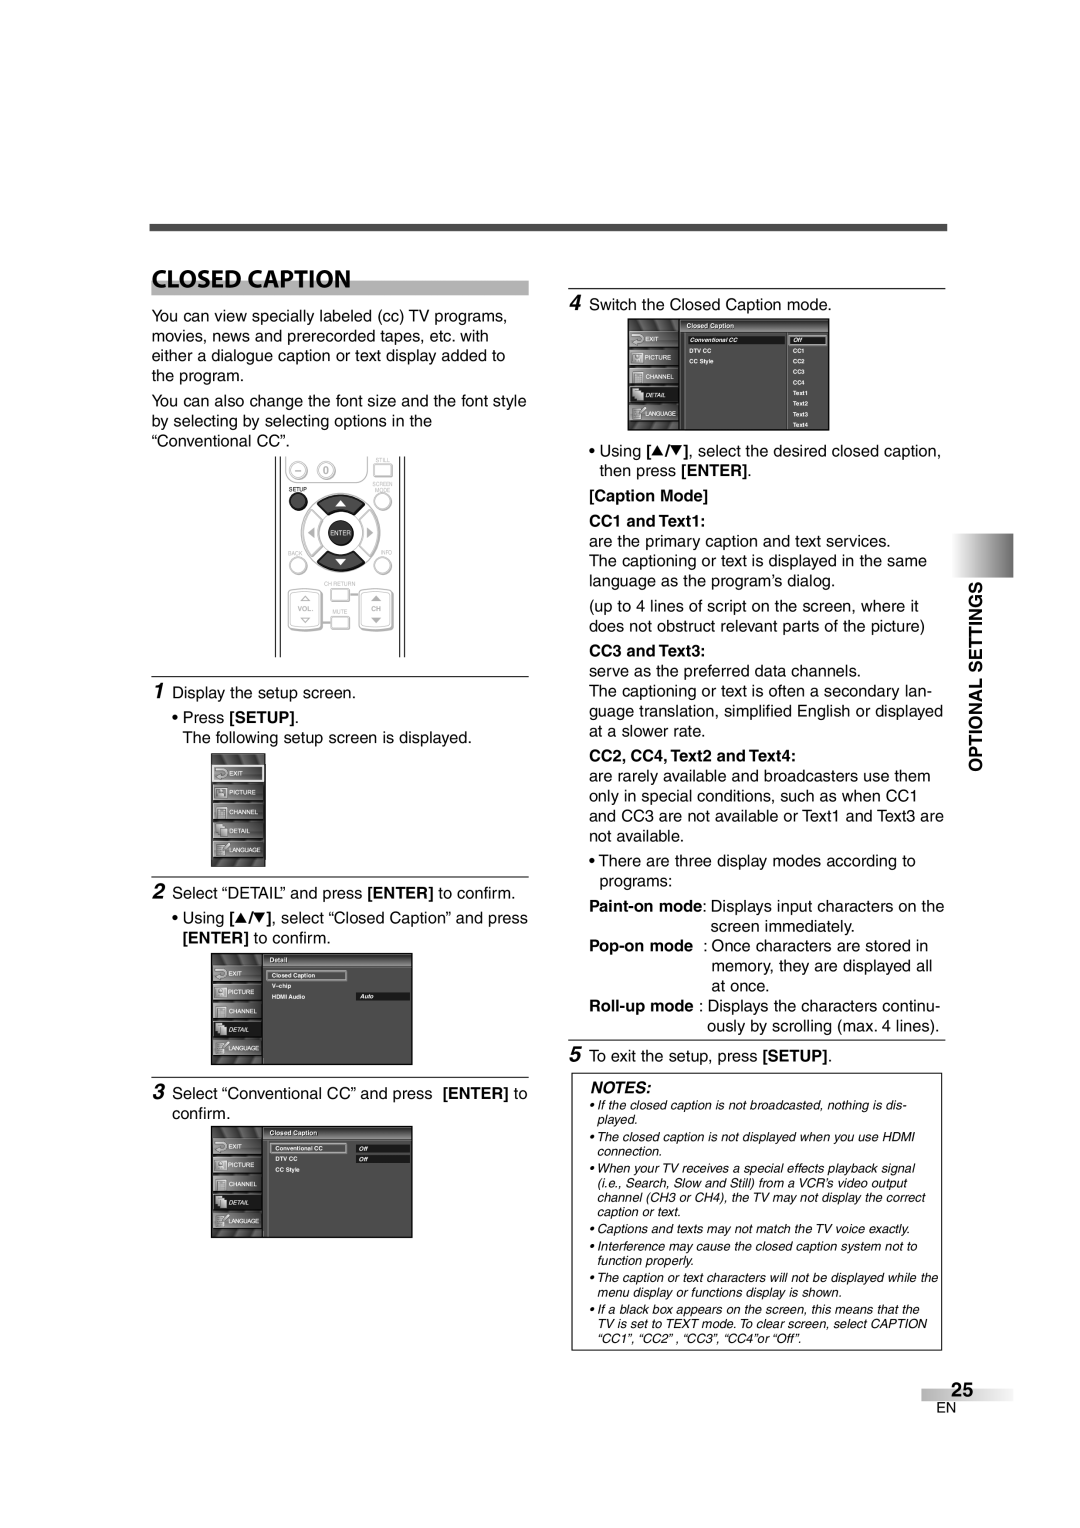 FUNAI CIWL3206 owner manual Closed Caption, Caption Mode, CC1 and Text1, CC3 and Text3, CC2, CC4, Text2 and Text4 